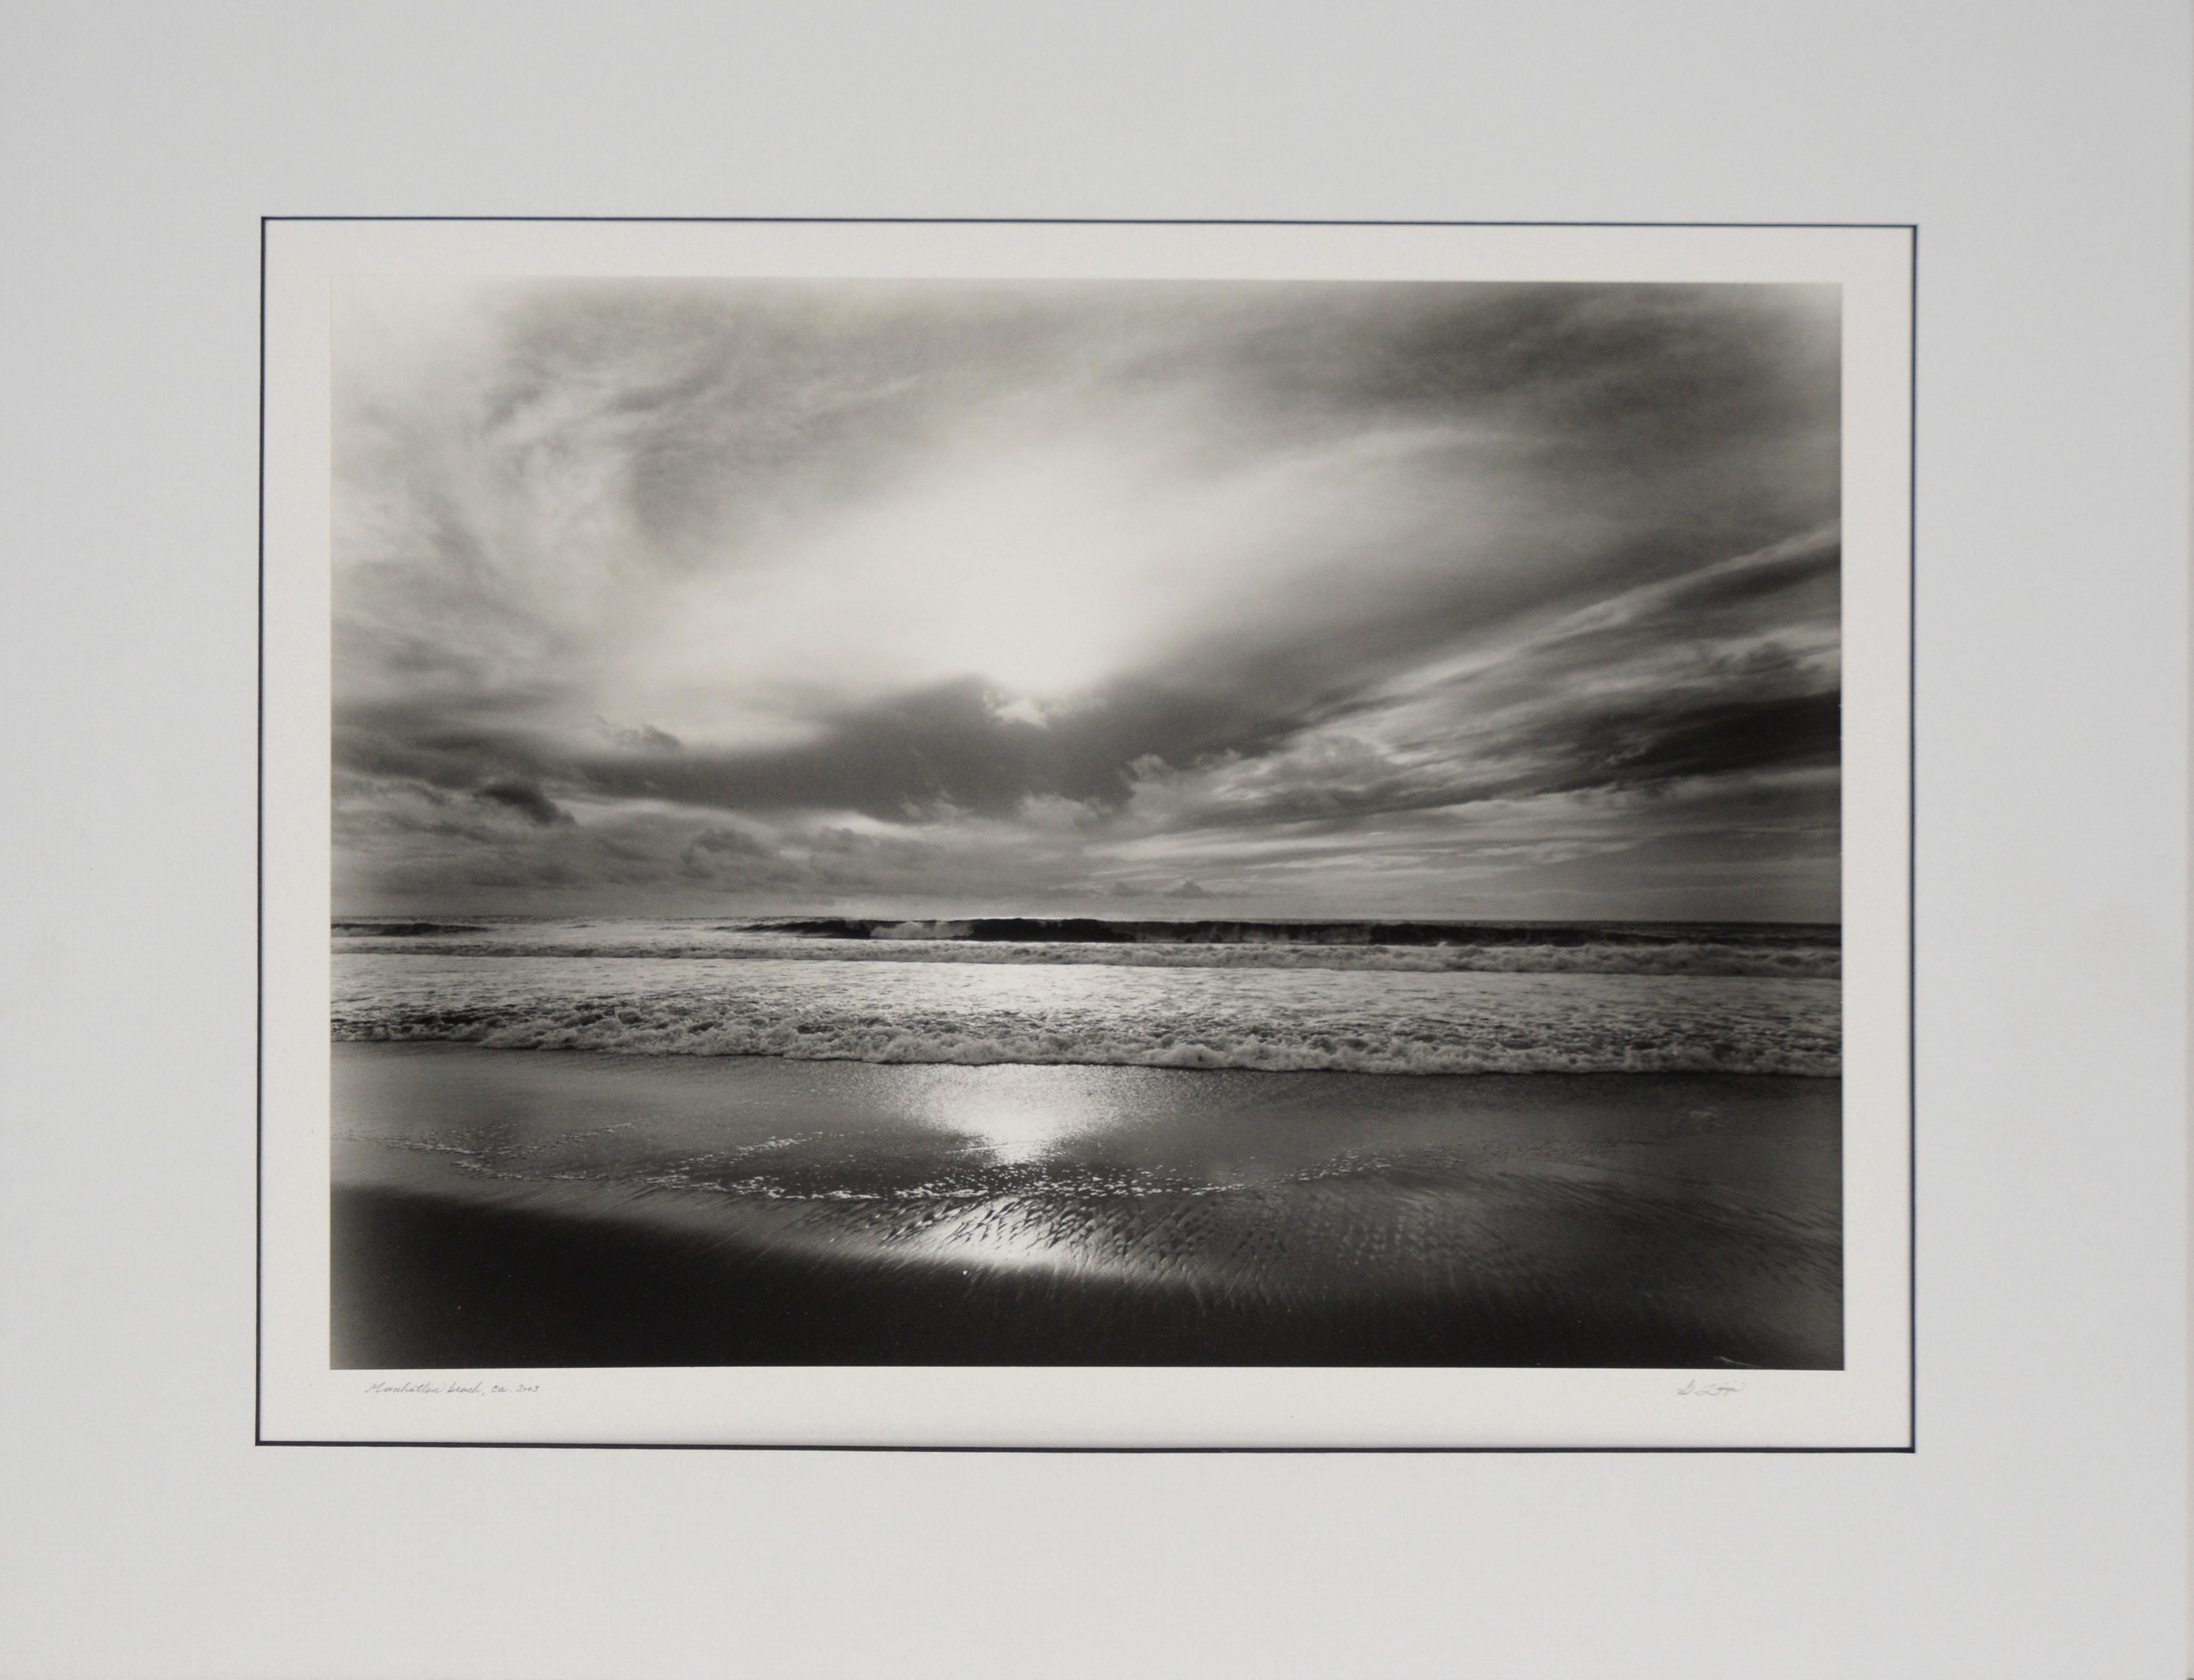 guillermo zuniga Landscape Photograph - Manhattan Beach, 2003 - Original Black and White Photograph